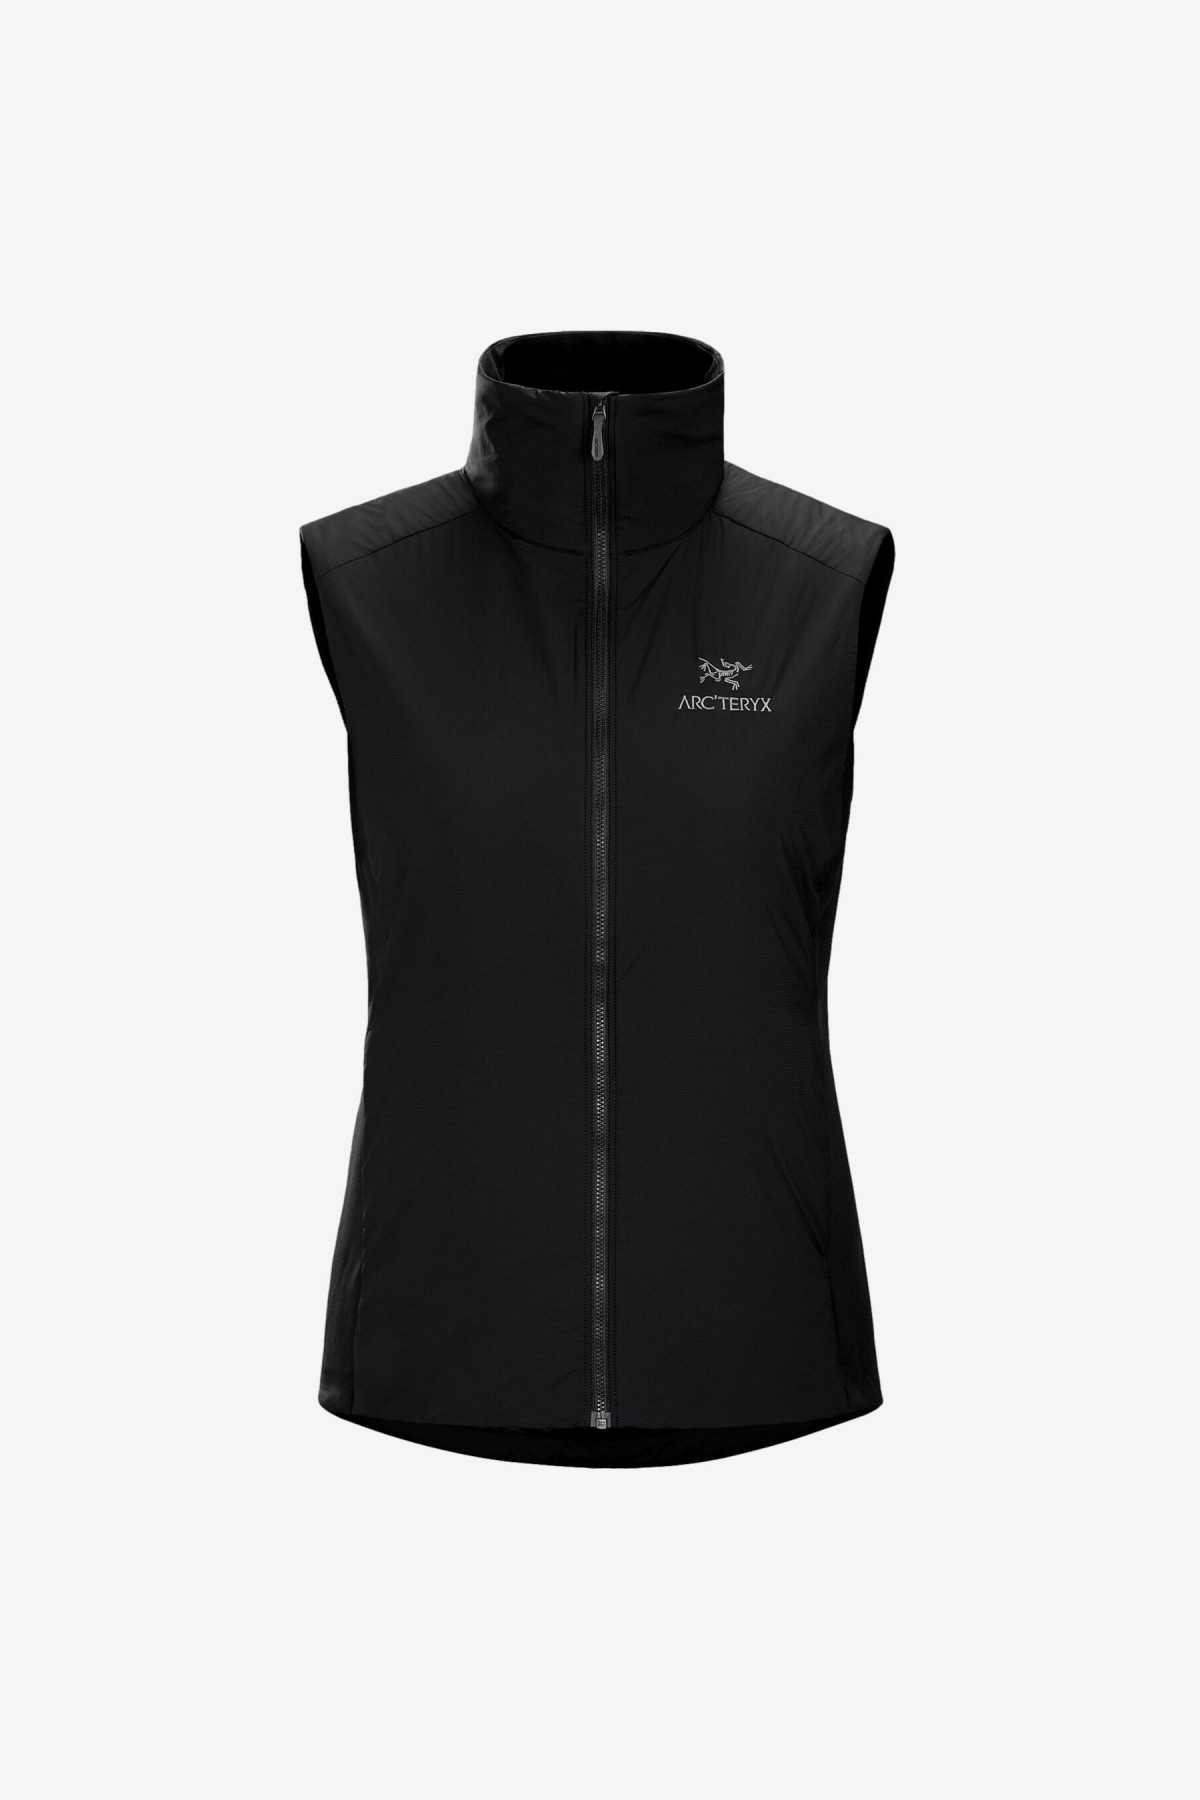 Arc'teryx Atom Lightweight Vest in Black